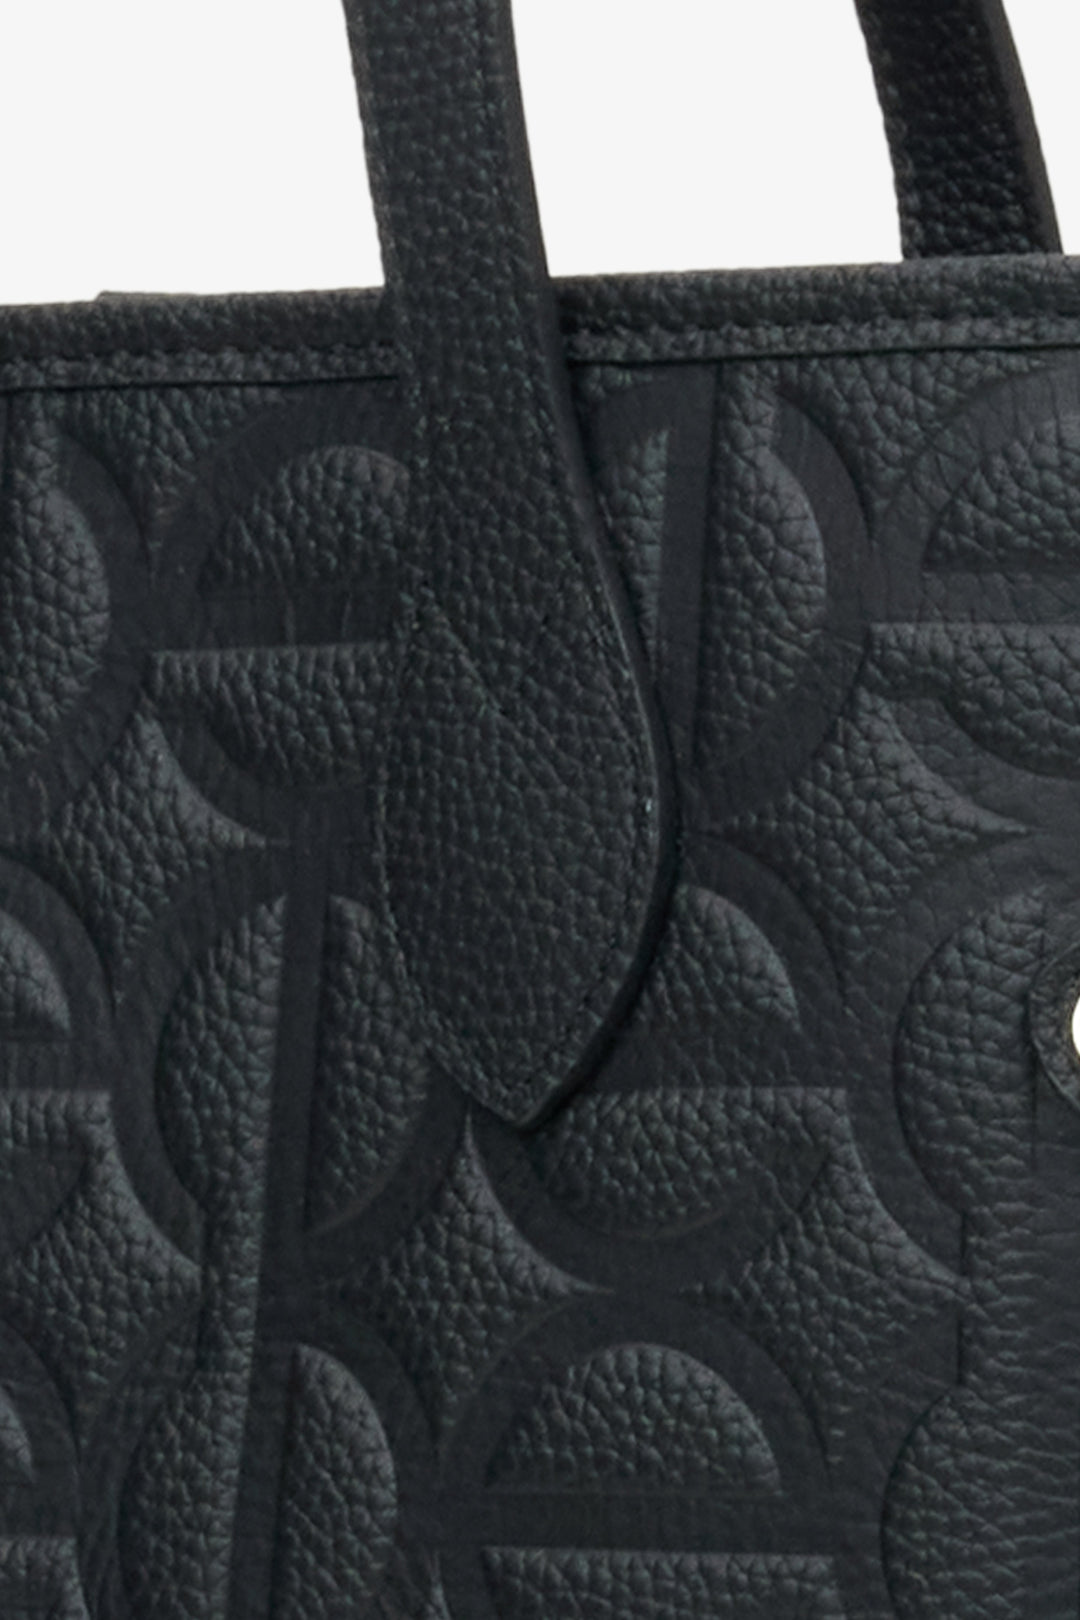 Leather women's black shopper bag by Estro - close-up on detail.